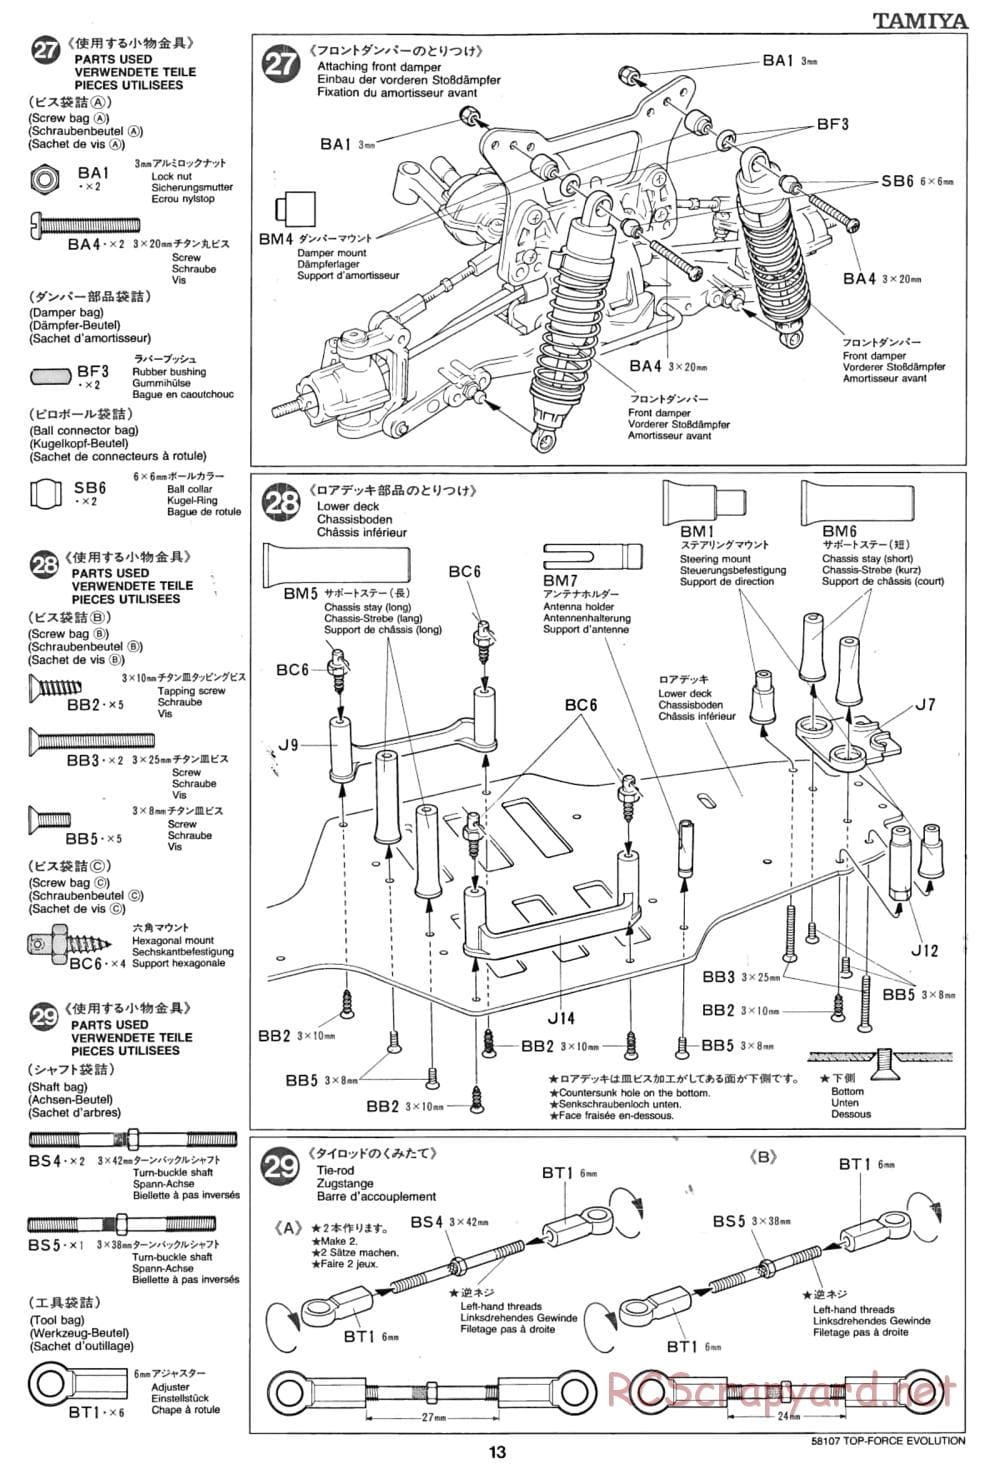 Tamiya - Top Force Evolution Chassis - Manual - Page 13